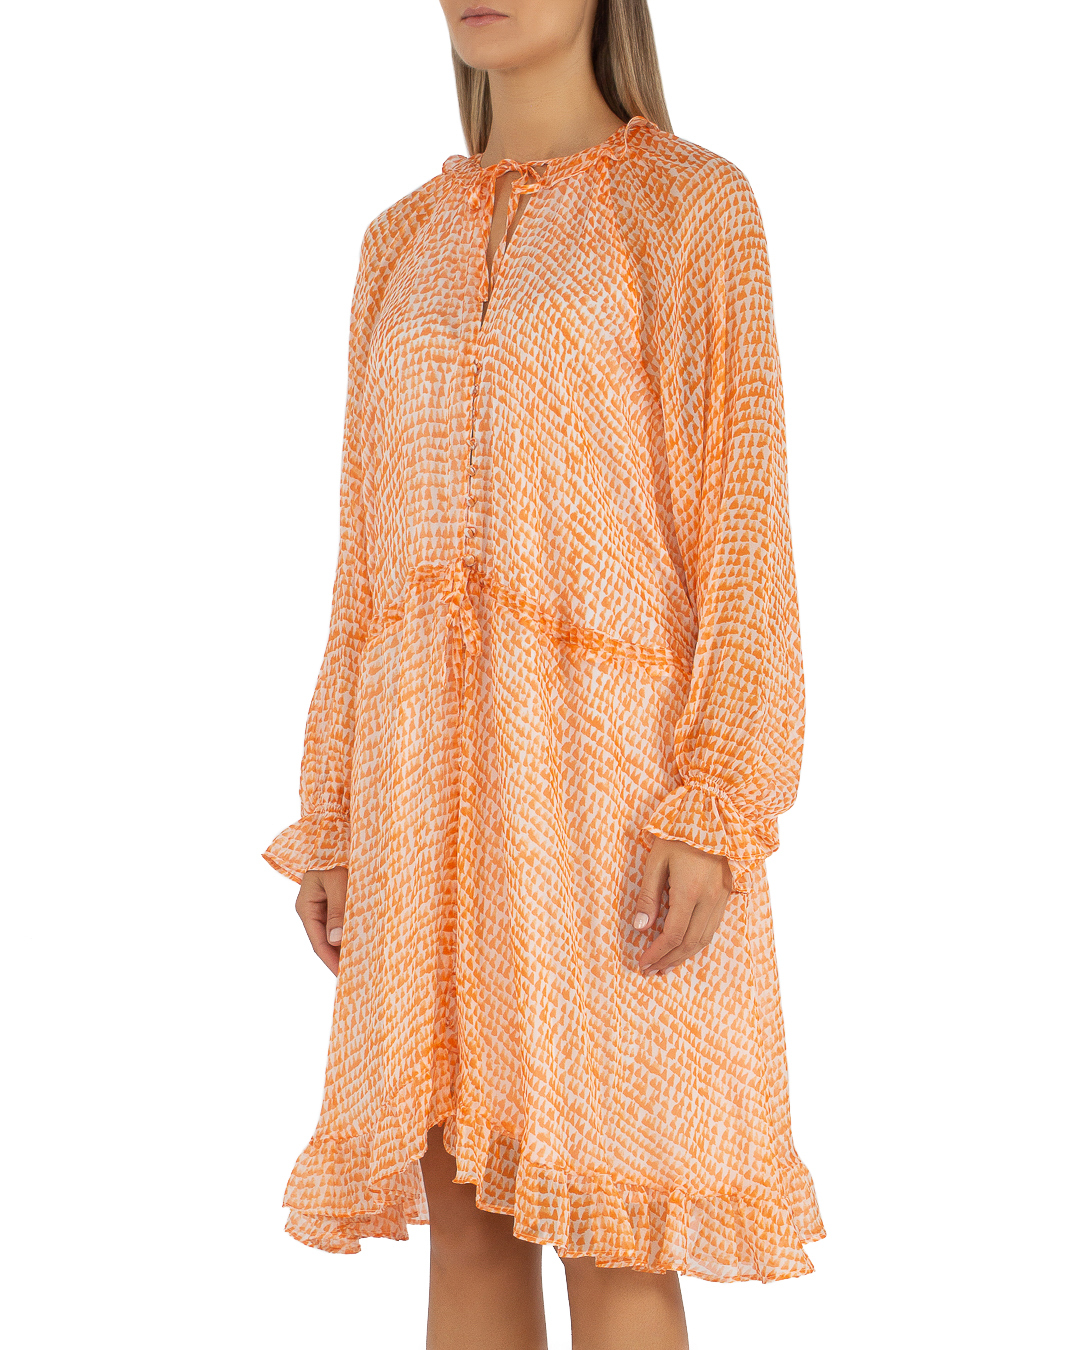 платье MAX&MOI E23PAROO оранжевый+бежевый 36, размер 36, цвет оранжевый+бежевый E23PAROO оранжевый+бежевый 36 - фото 3